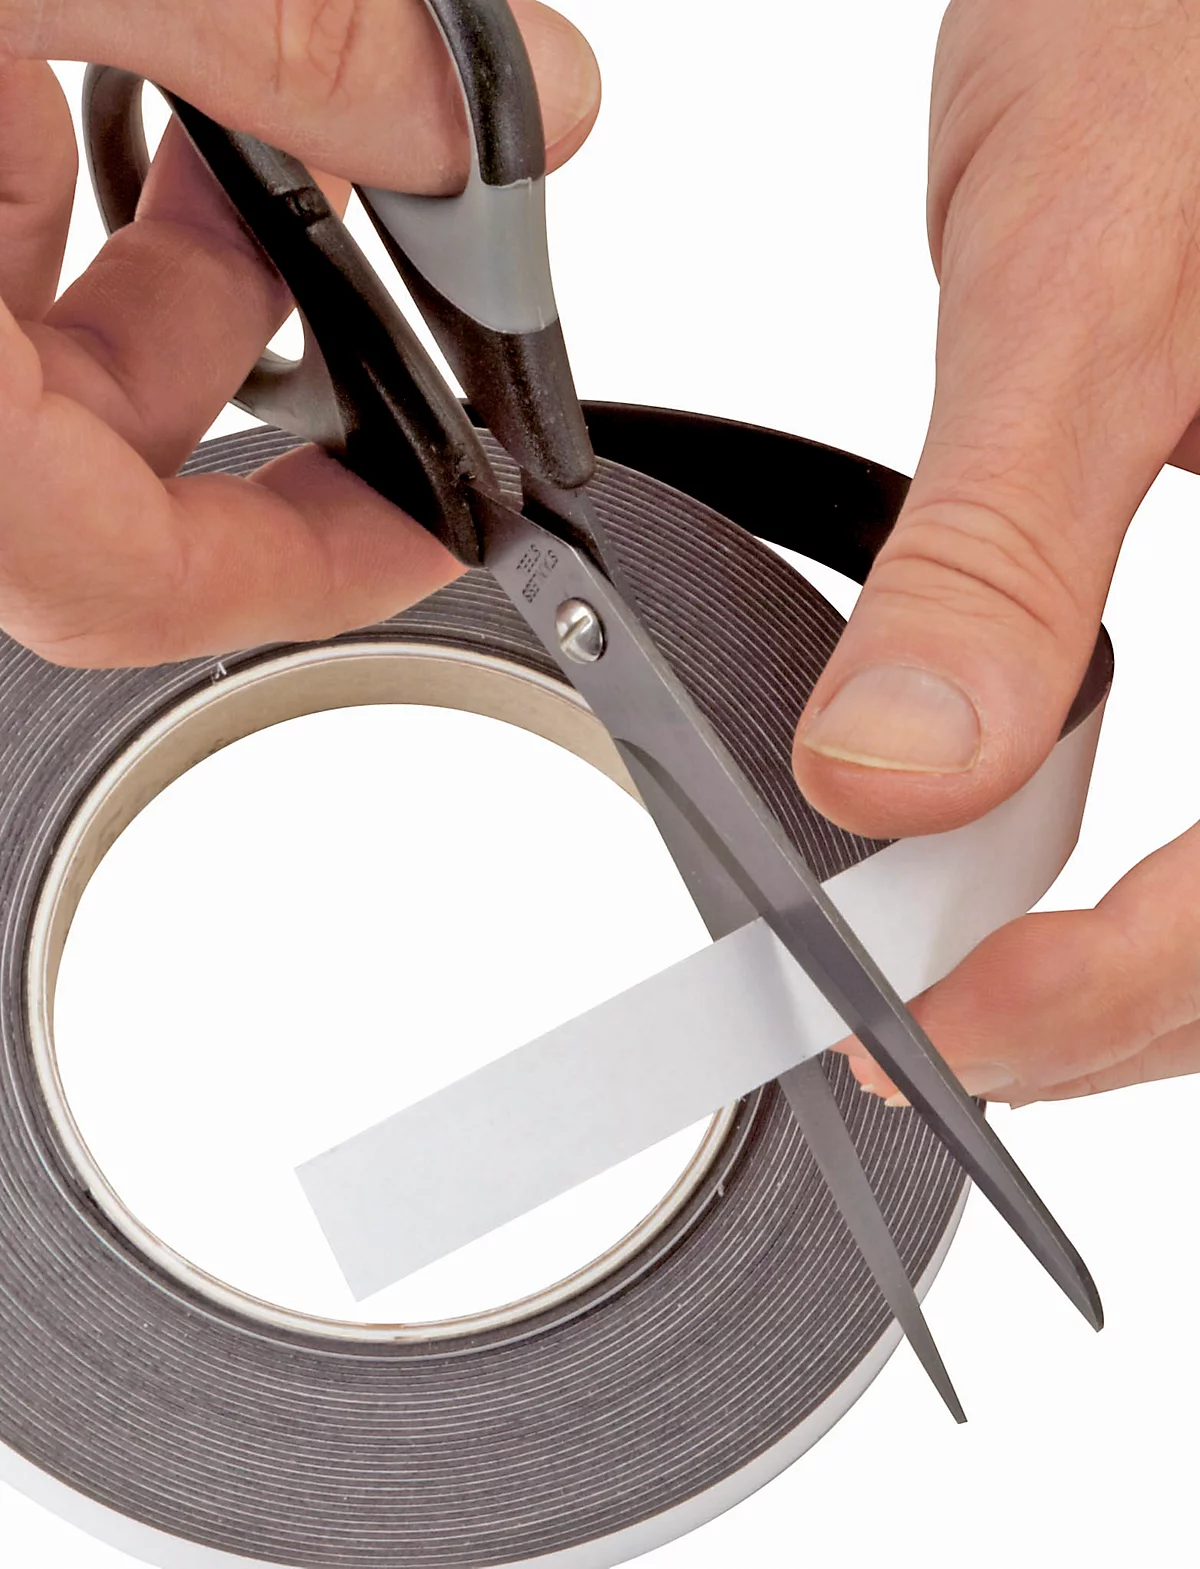 Schäfer Shop Select Magnetband, selbstklebend, 10 mm breit